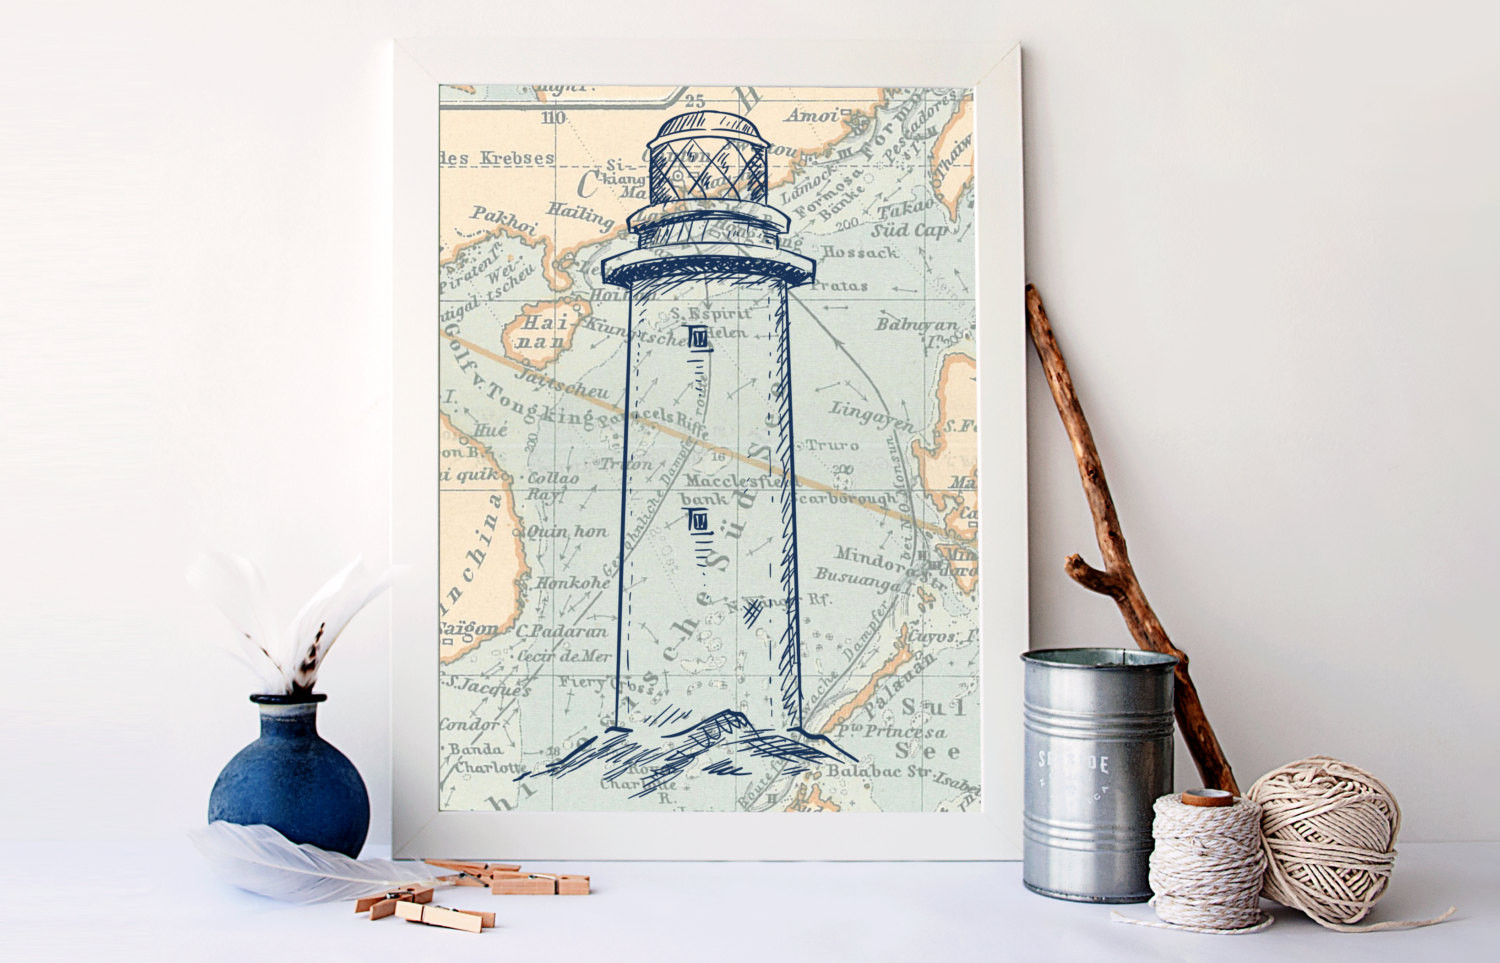 Best ideas about Light House Bathroom Decor
. Save or Pin Vintage ocean map Lighthouse on map decor bathroom nautical Now.